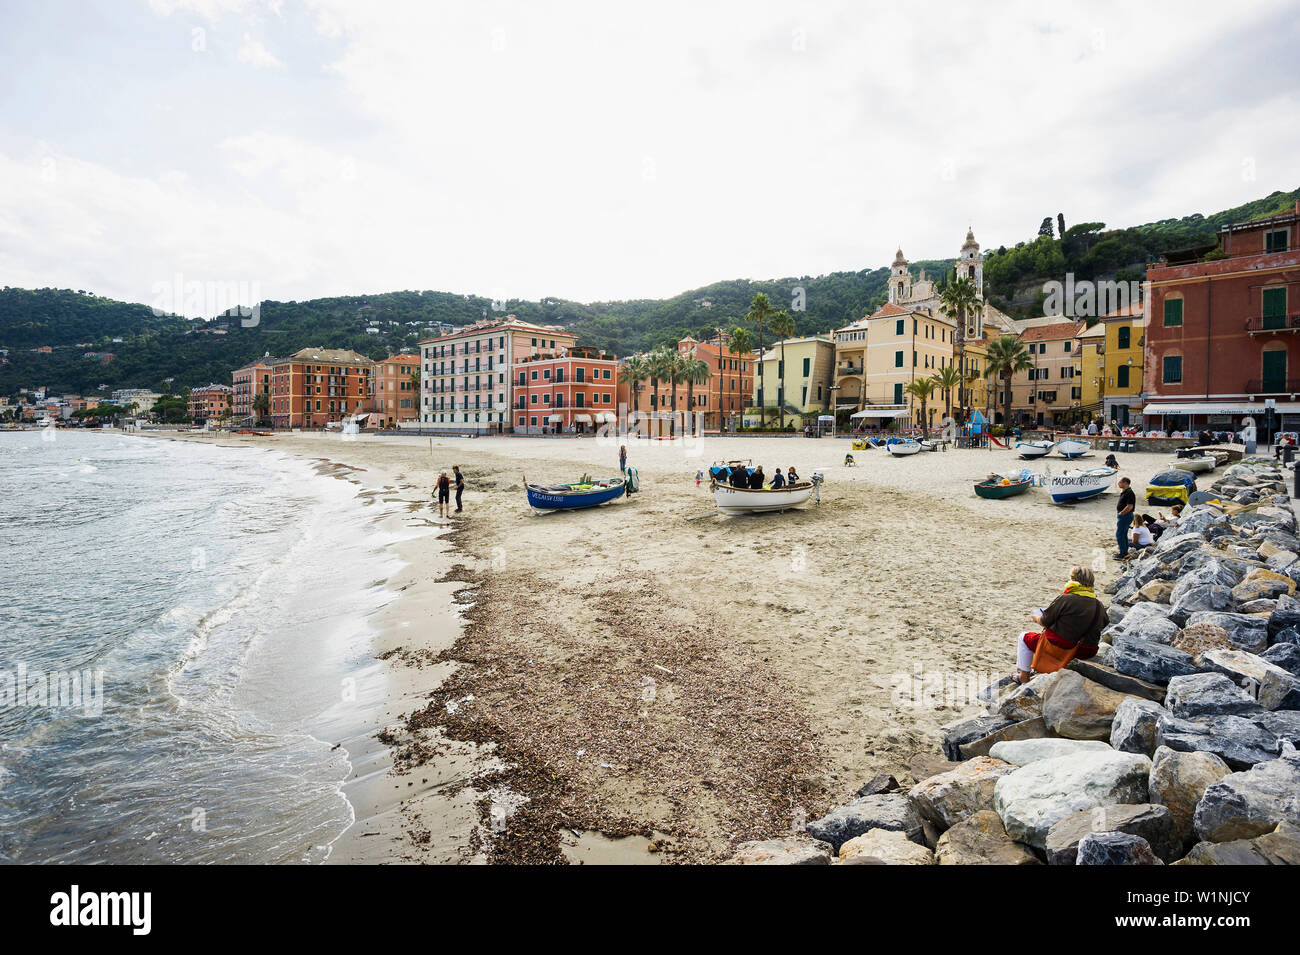 Beach at Laigueglia, Province of Savona, Riviera di Ponente, Liguria, Italy Stock Photo